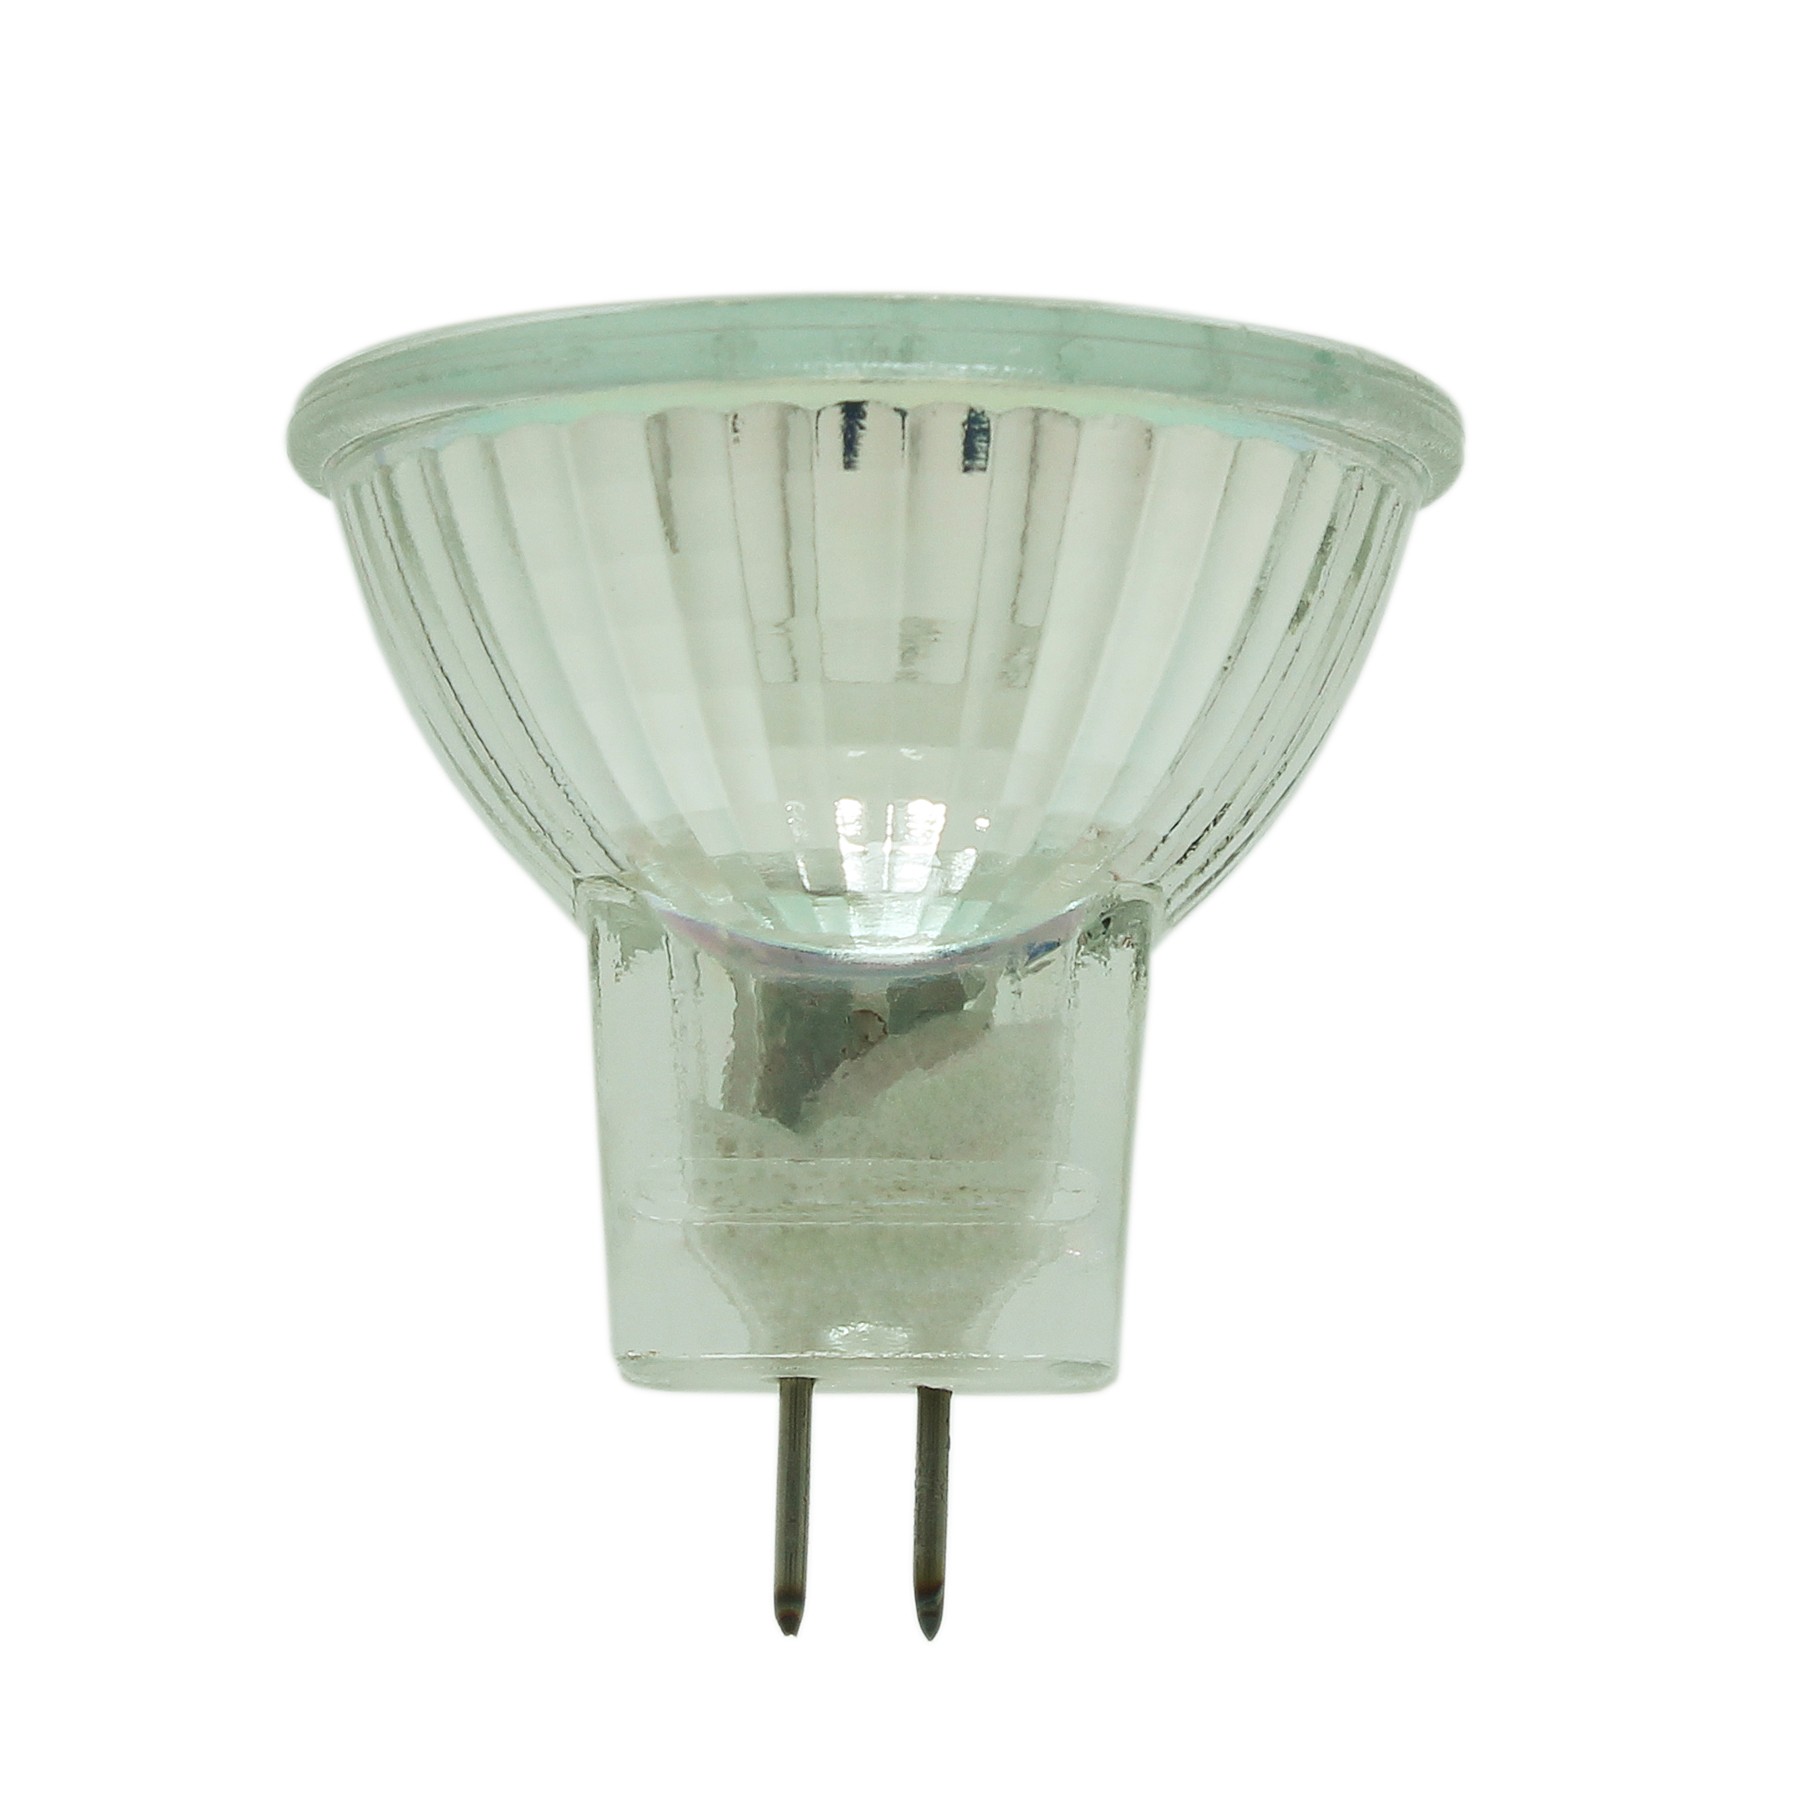 4x 16W 12V = 20W 25 Degrees Lamp MR11 GU4 Halogen Reflector Spot Light Bulbs